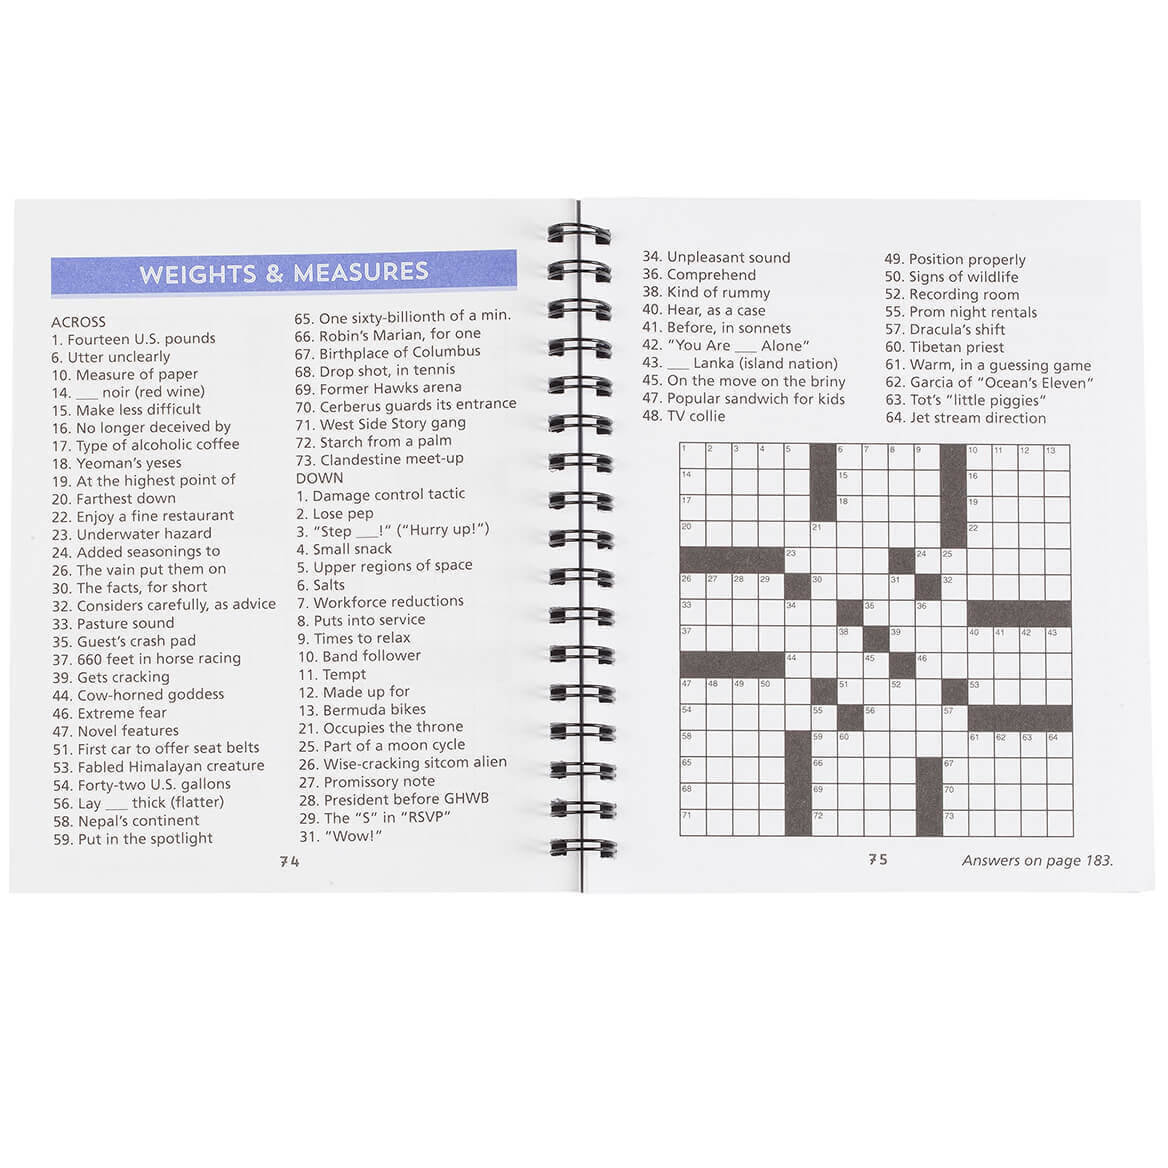 Coloring ~ Coloring Free Large Print Crosswords Easy For Seniors - Thomas Joseph Crossword Puzzles Printable